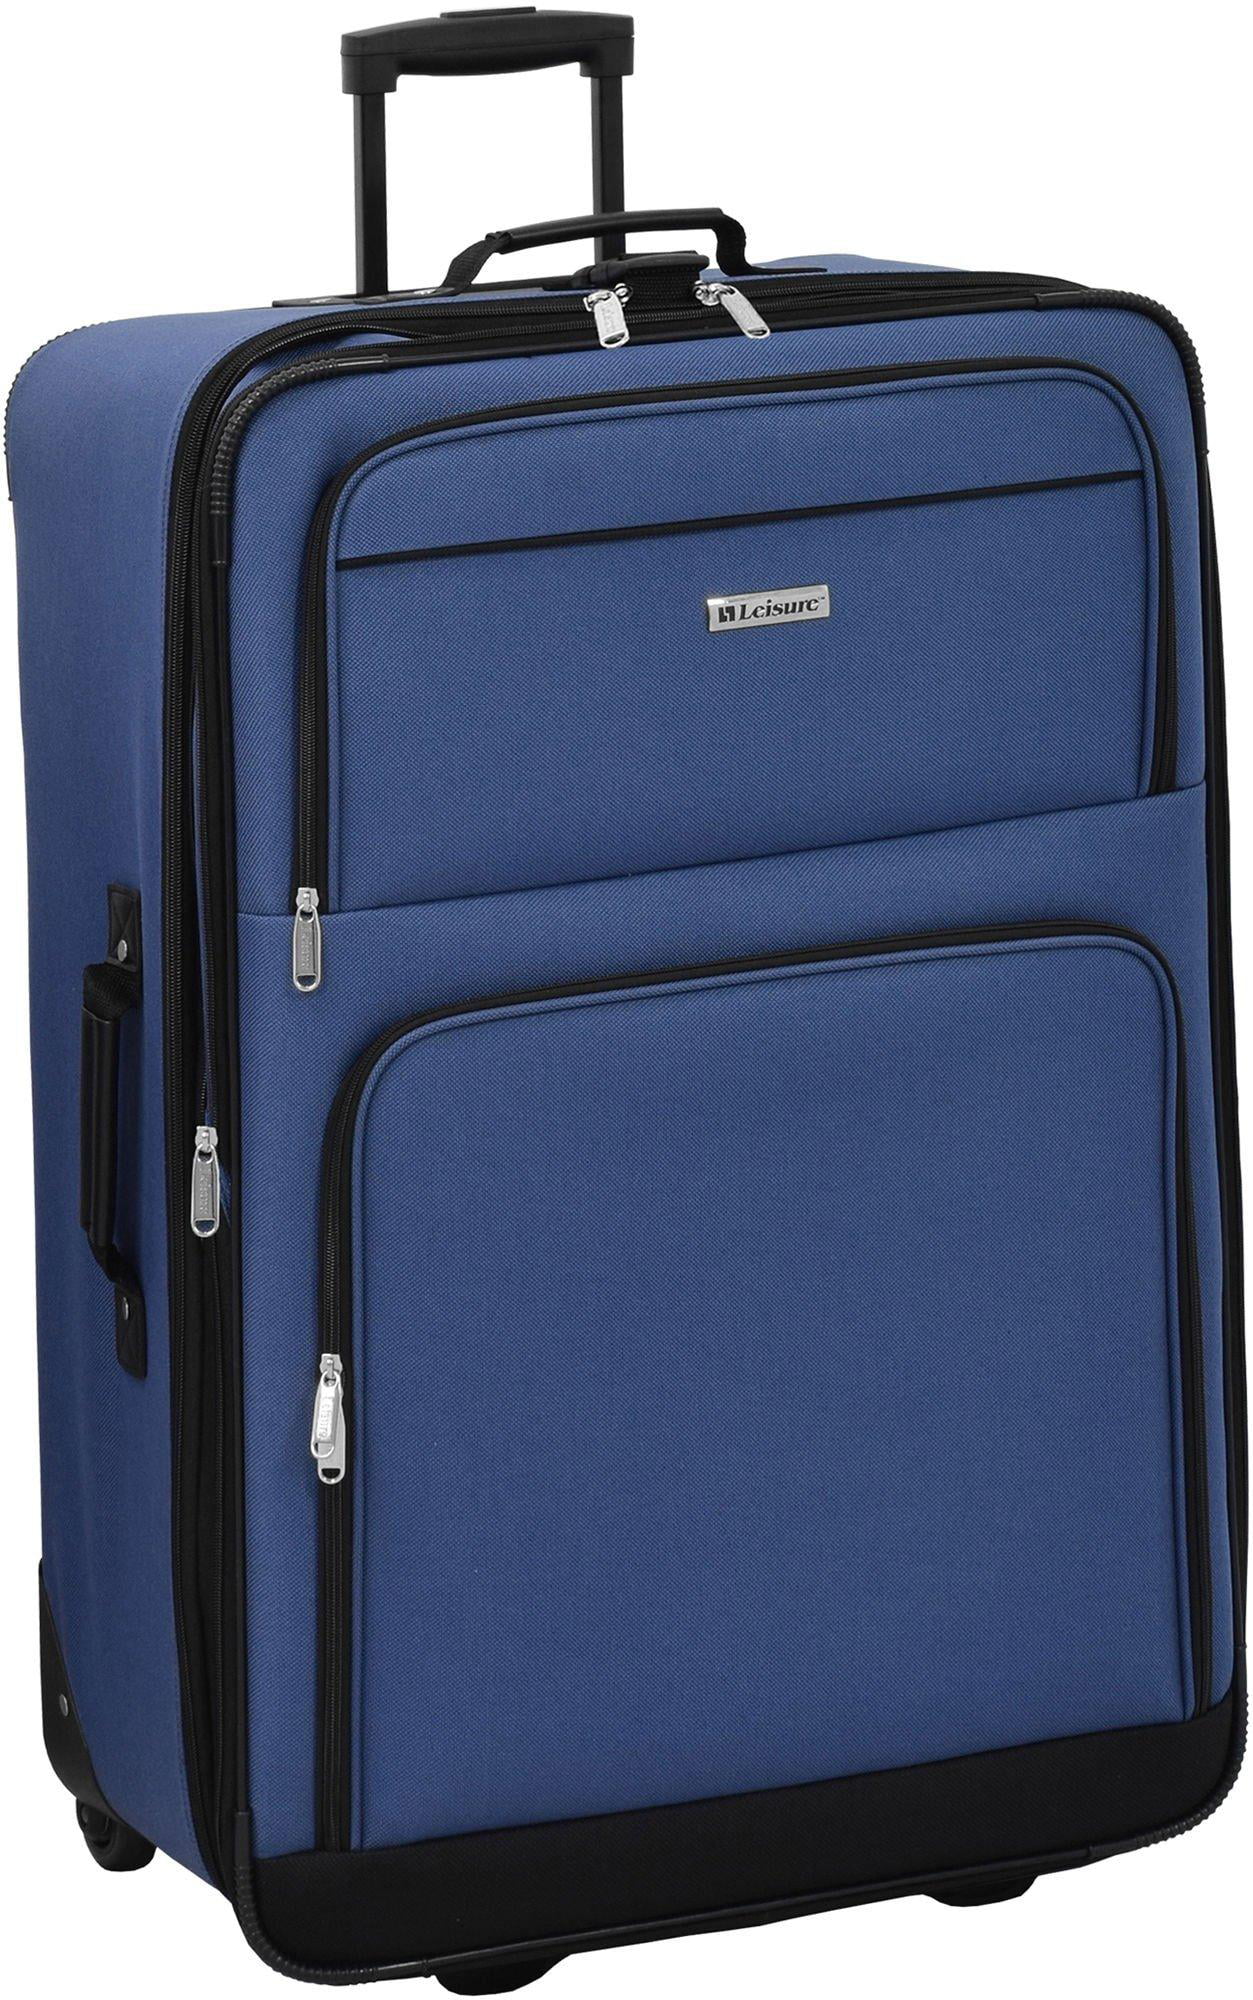 travel luggage 29 inch